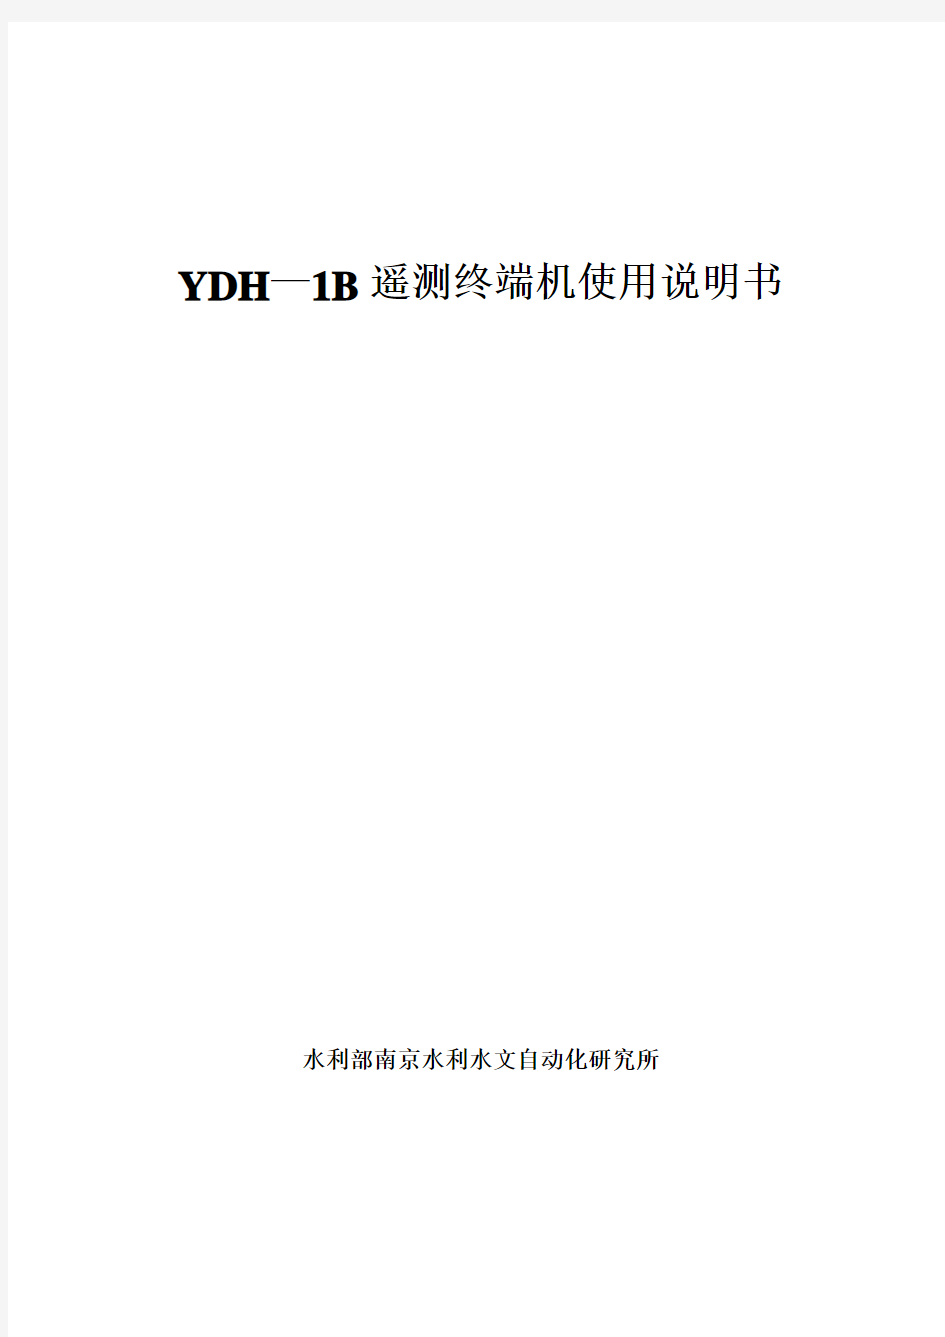 YDH—1B说明书